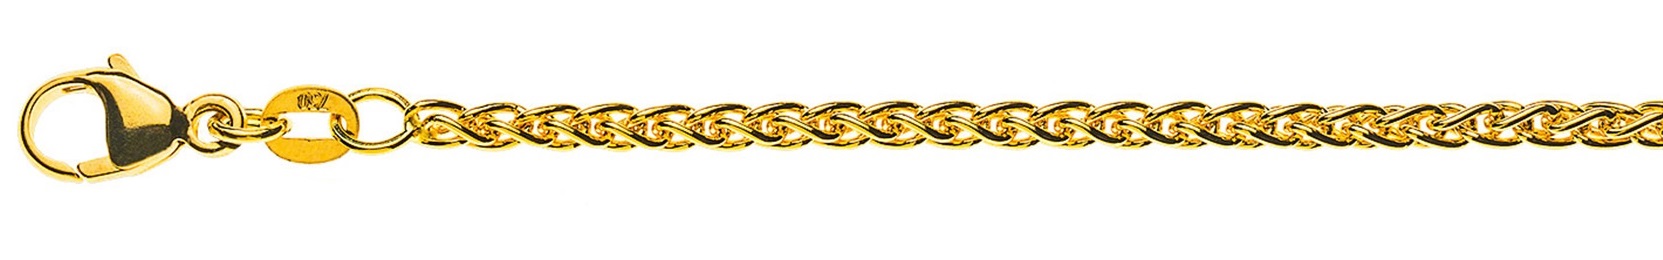 AURONOS Prestige Necklace yellow gold 18K cable chain 50cm 2.5mm